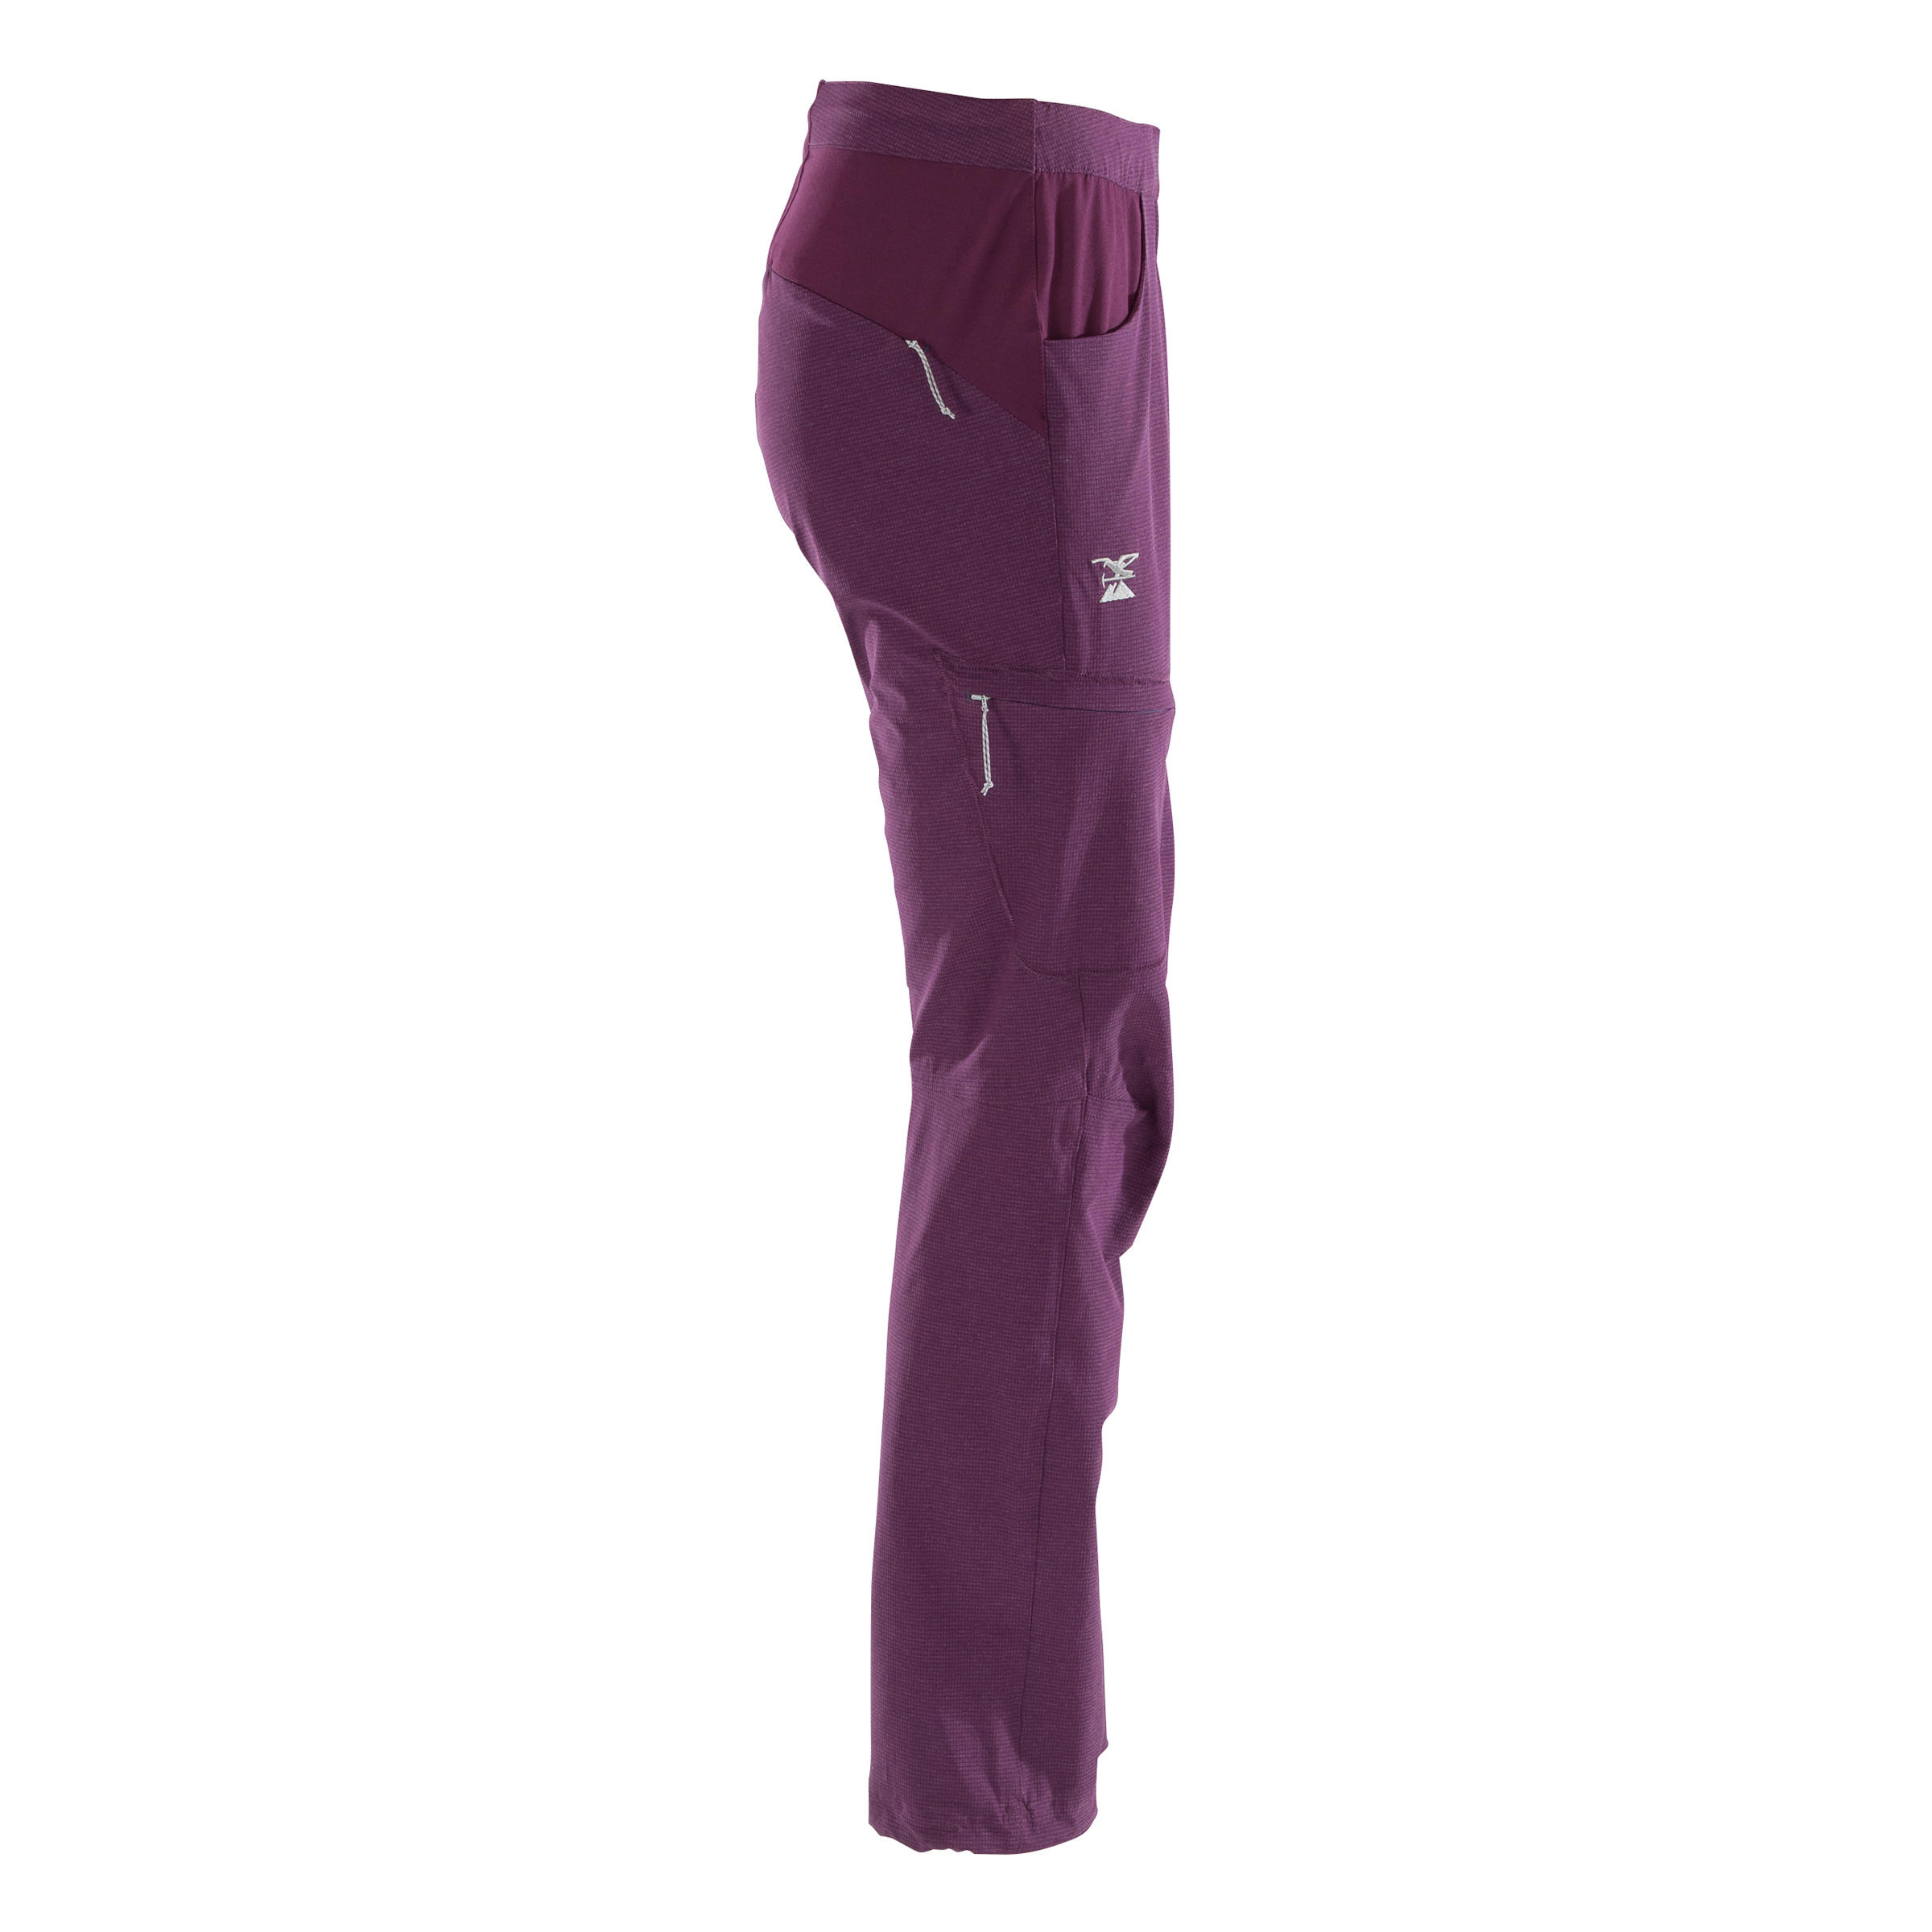 Pantalon escalada y montaña Mujer Simond Edge violeta | Decathlon